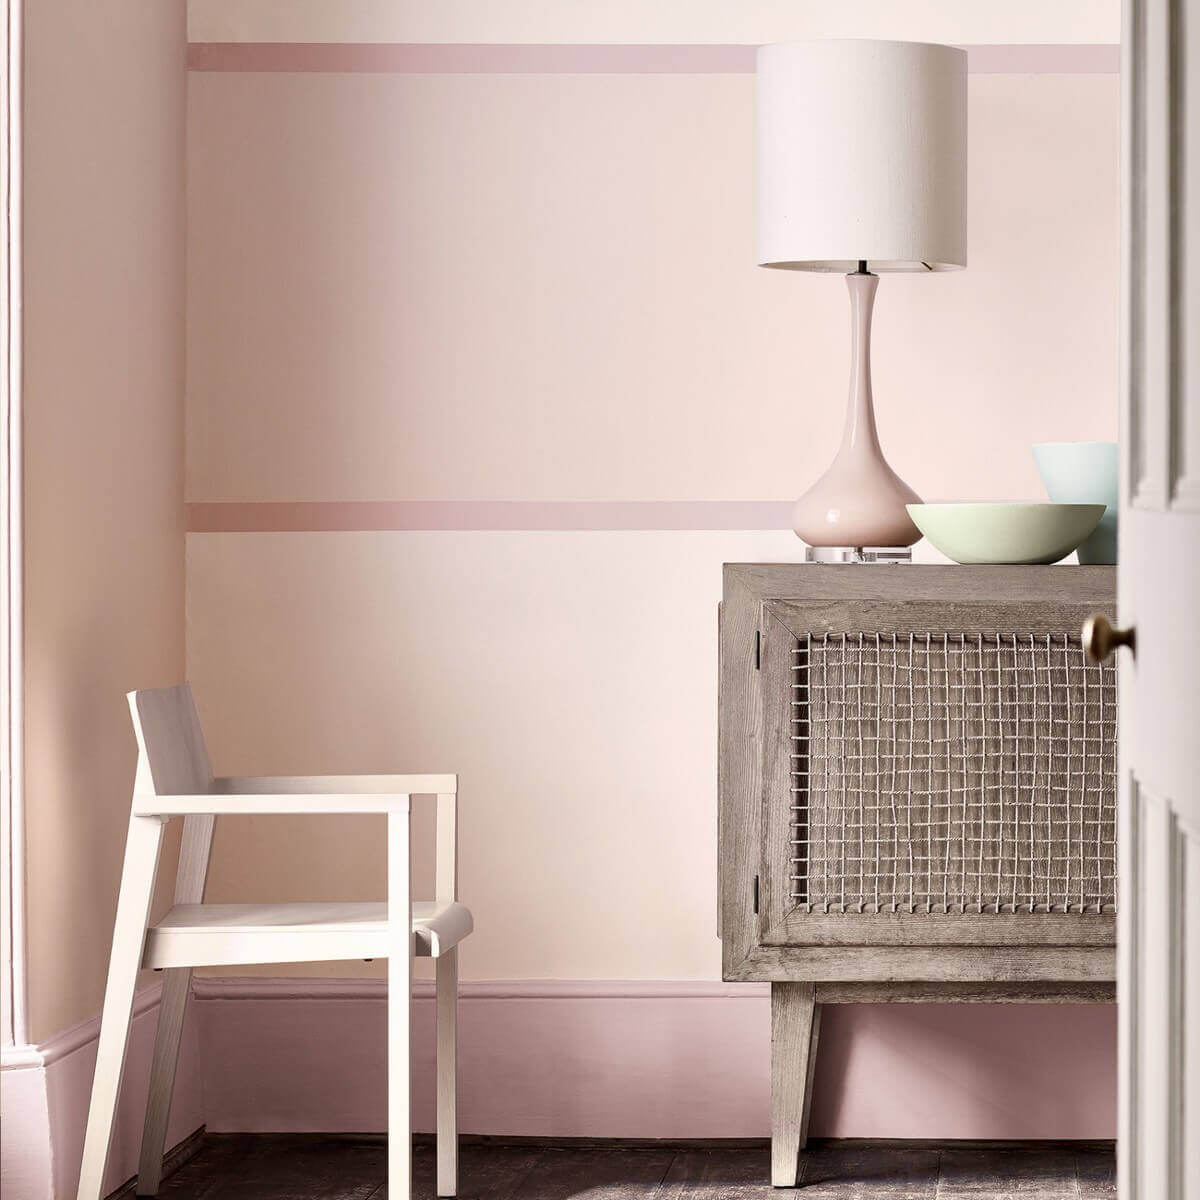 Interior paint Little Greene color neutral Dorchester Pink (213).